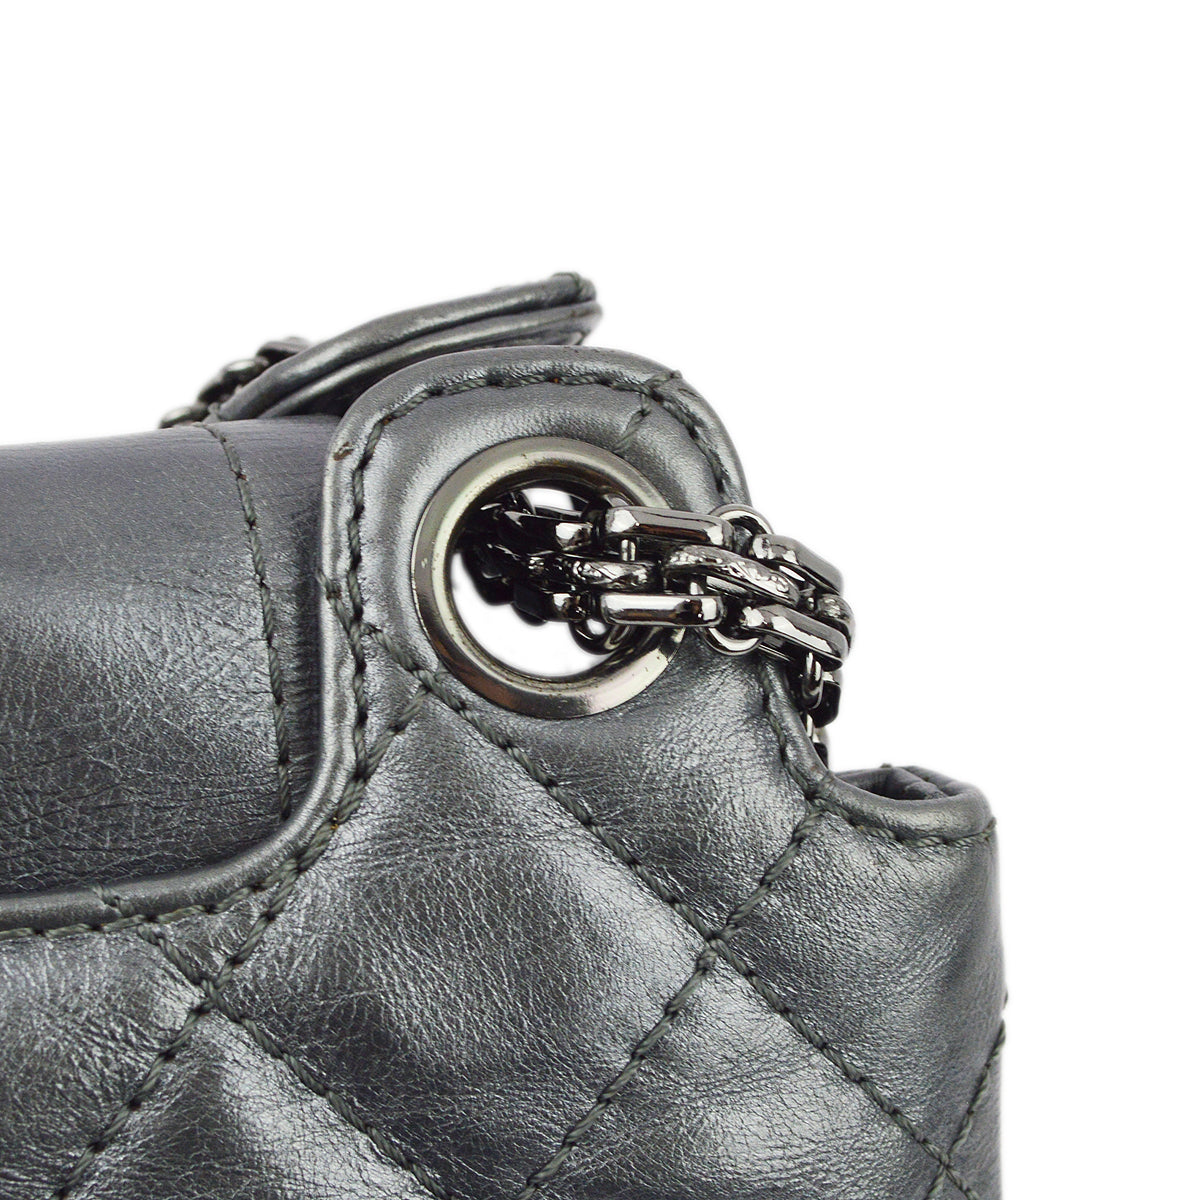 Chanel Silver Lambskin Mademoiselle Lock Shoulder Bag